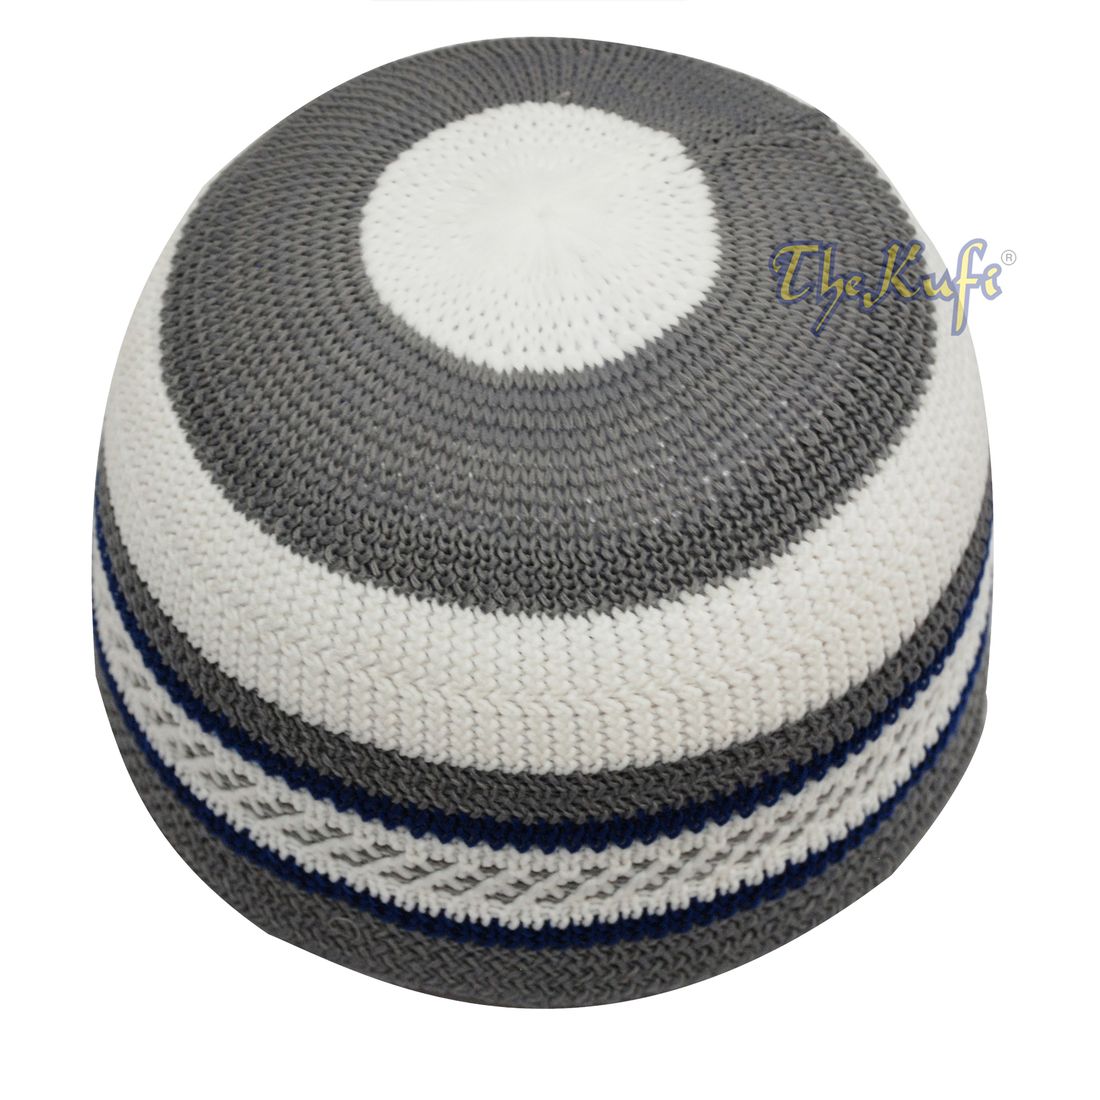 Islamic White and Gray with Navy-blue Stripes Nylon Stretchy Textured Kufi Hat Skullcap Topi Skullie